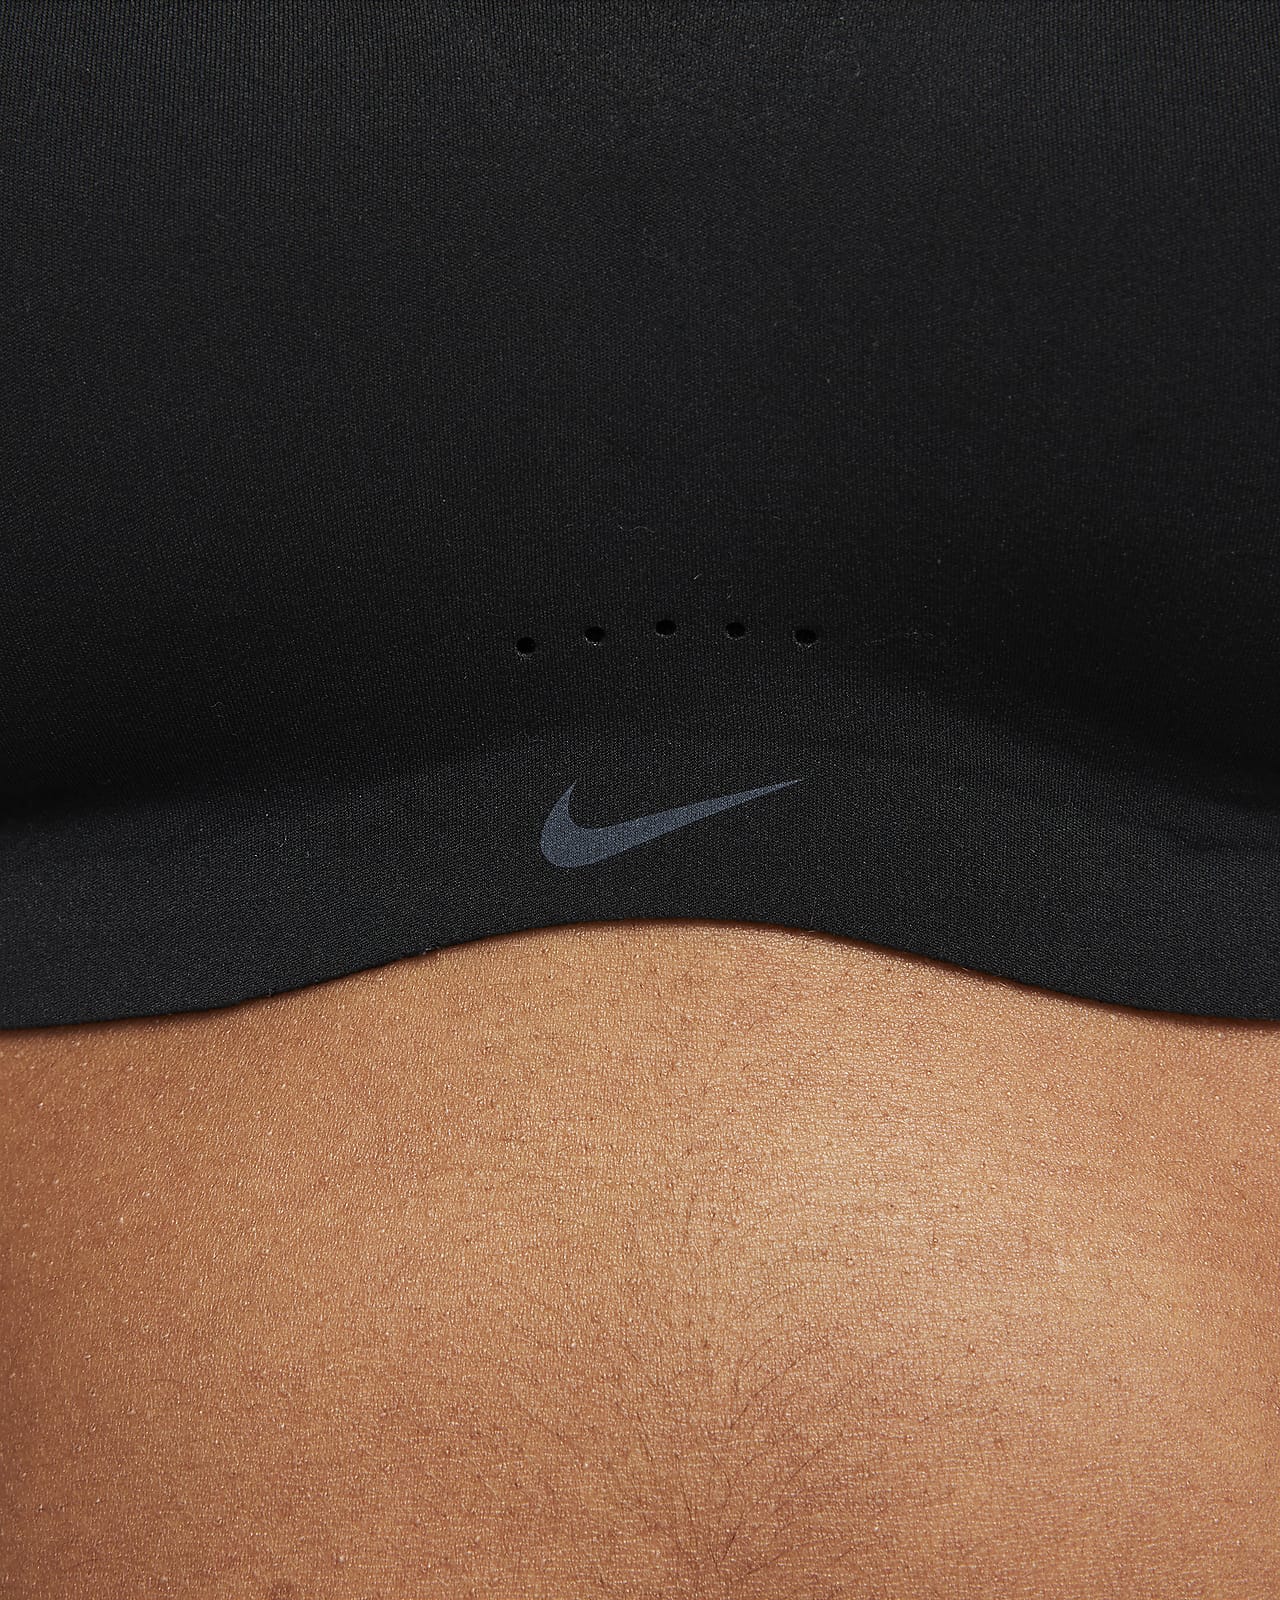 Women's Nike Alate Minimalist Sports Bra Size 1X (C-E) White